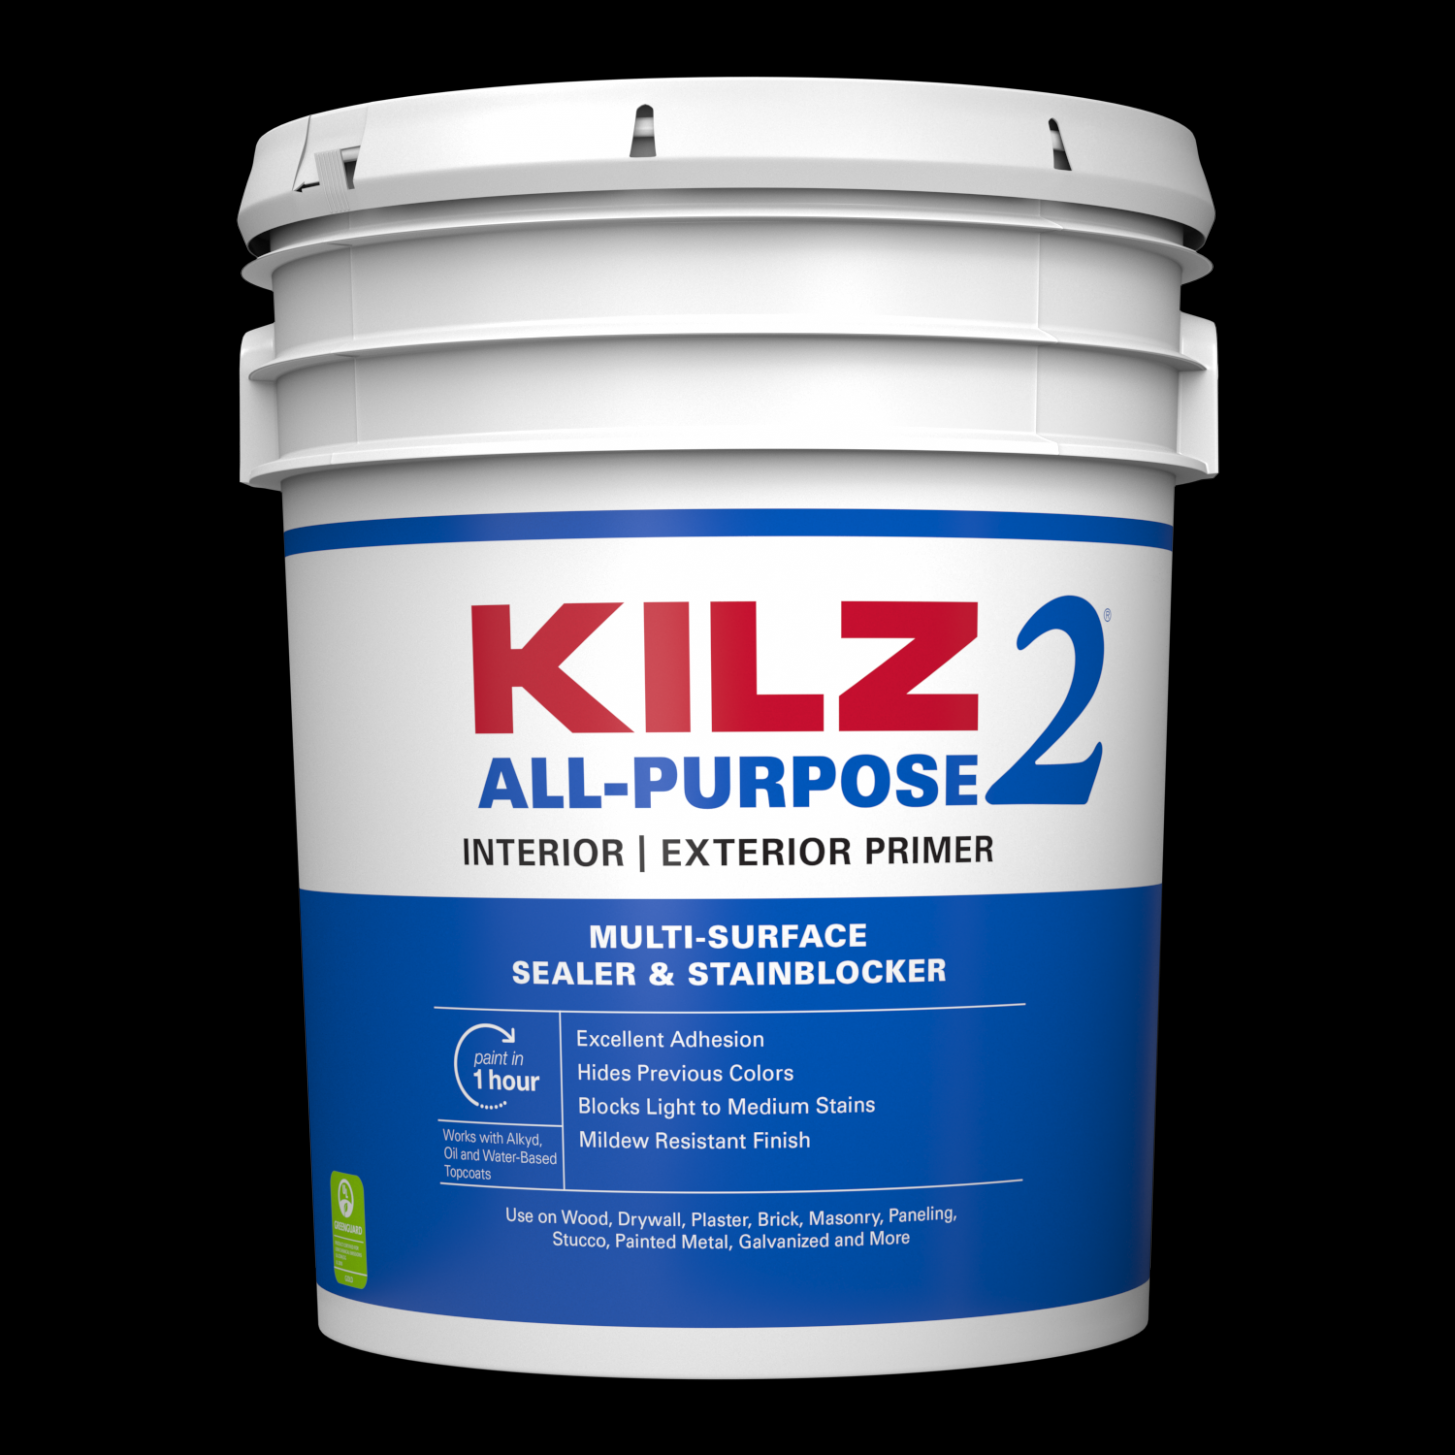 Kilz 9® All Purpose Interior/exterior Primer | Behr Pro Kilz Chalk Paint